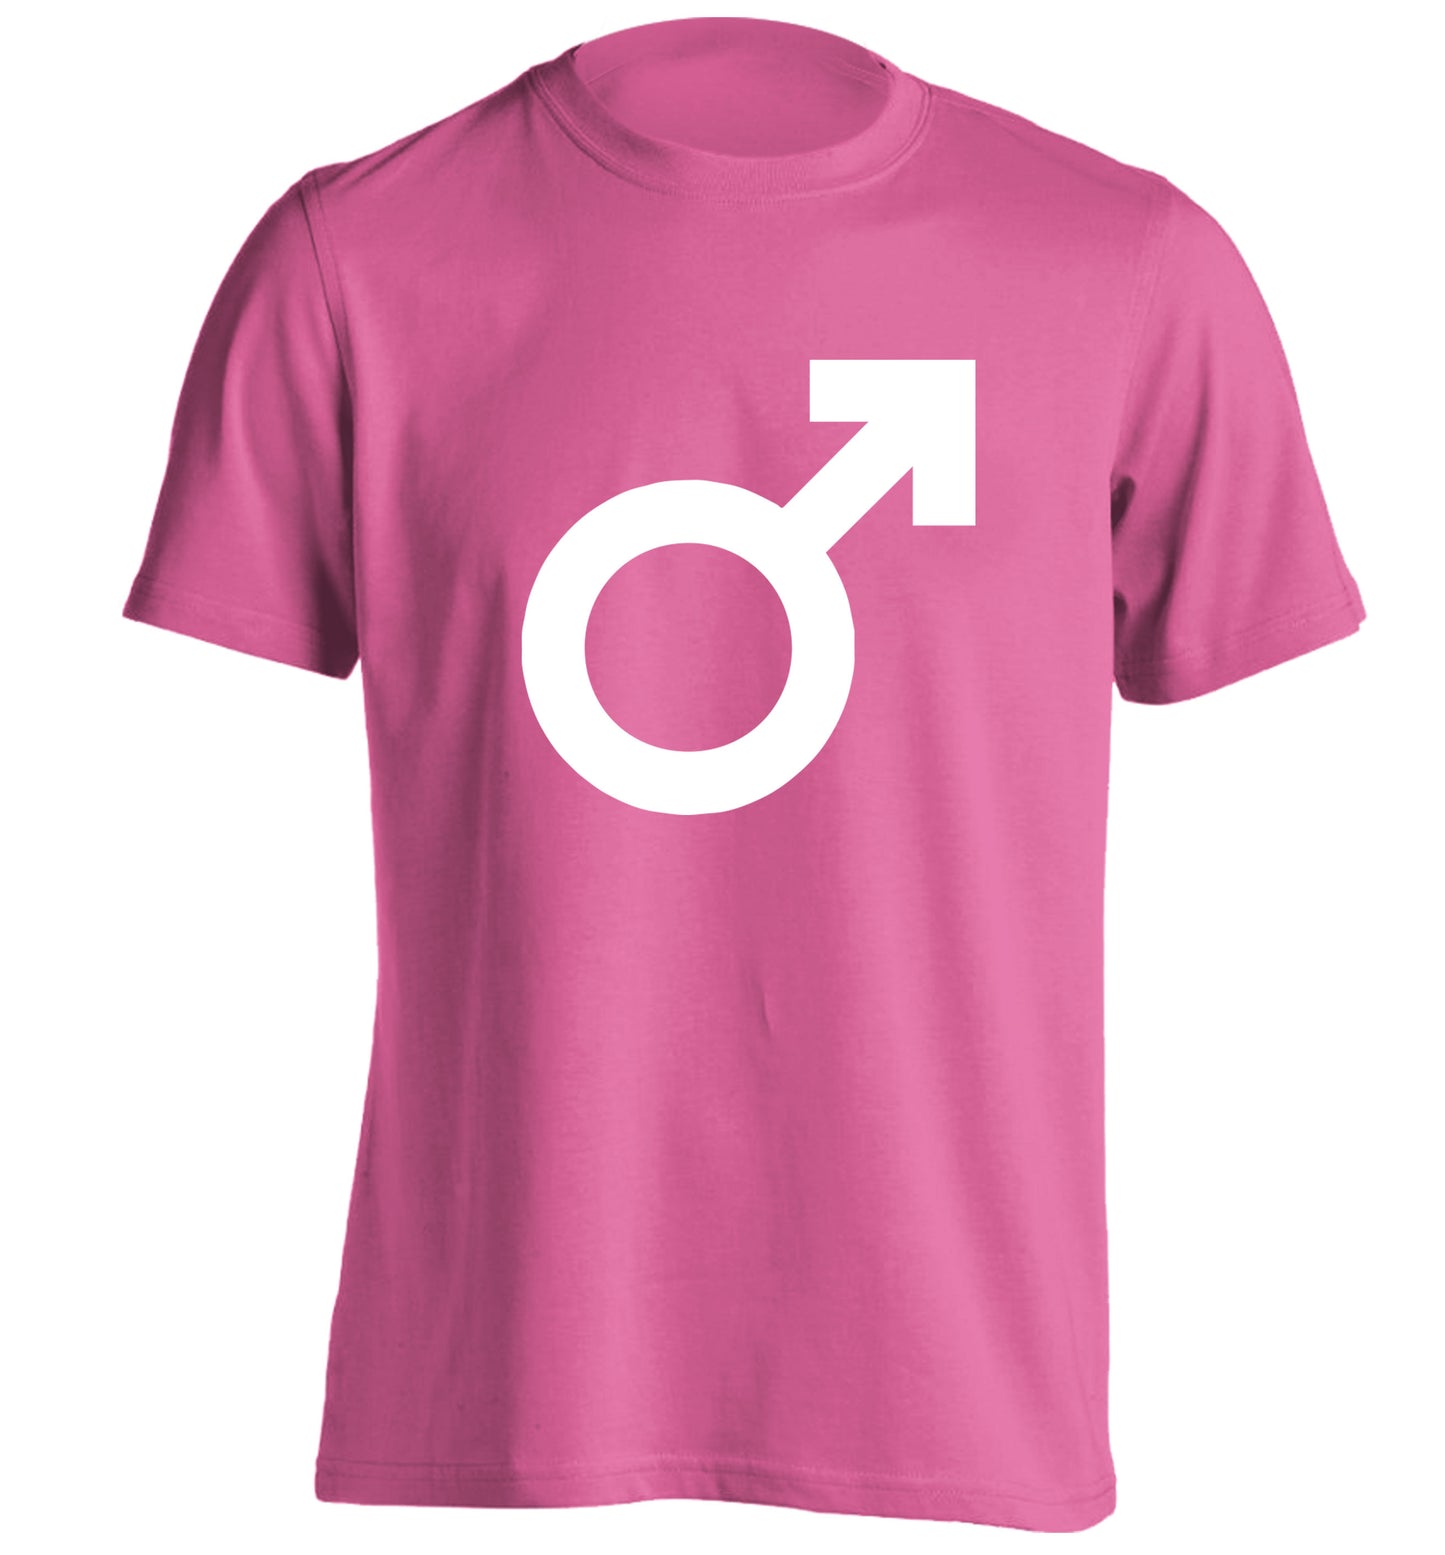 Male symbol large adults unisex pink Tshirt 2XL